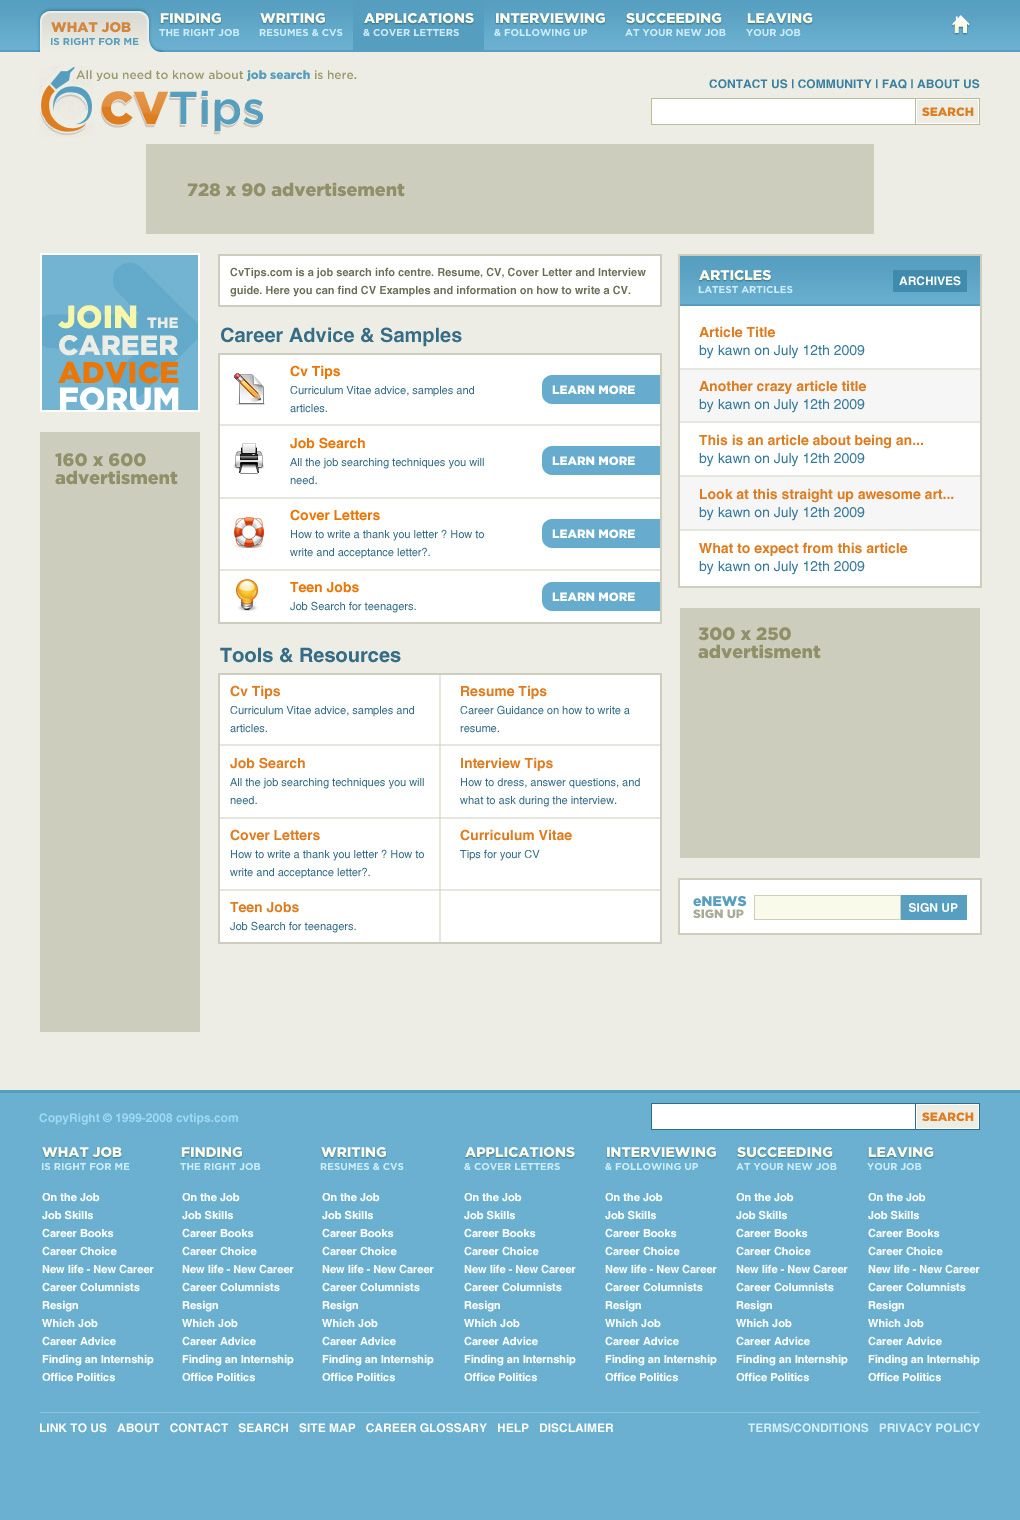 Homepage Design